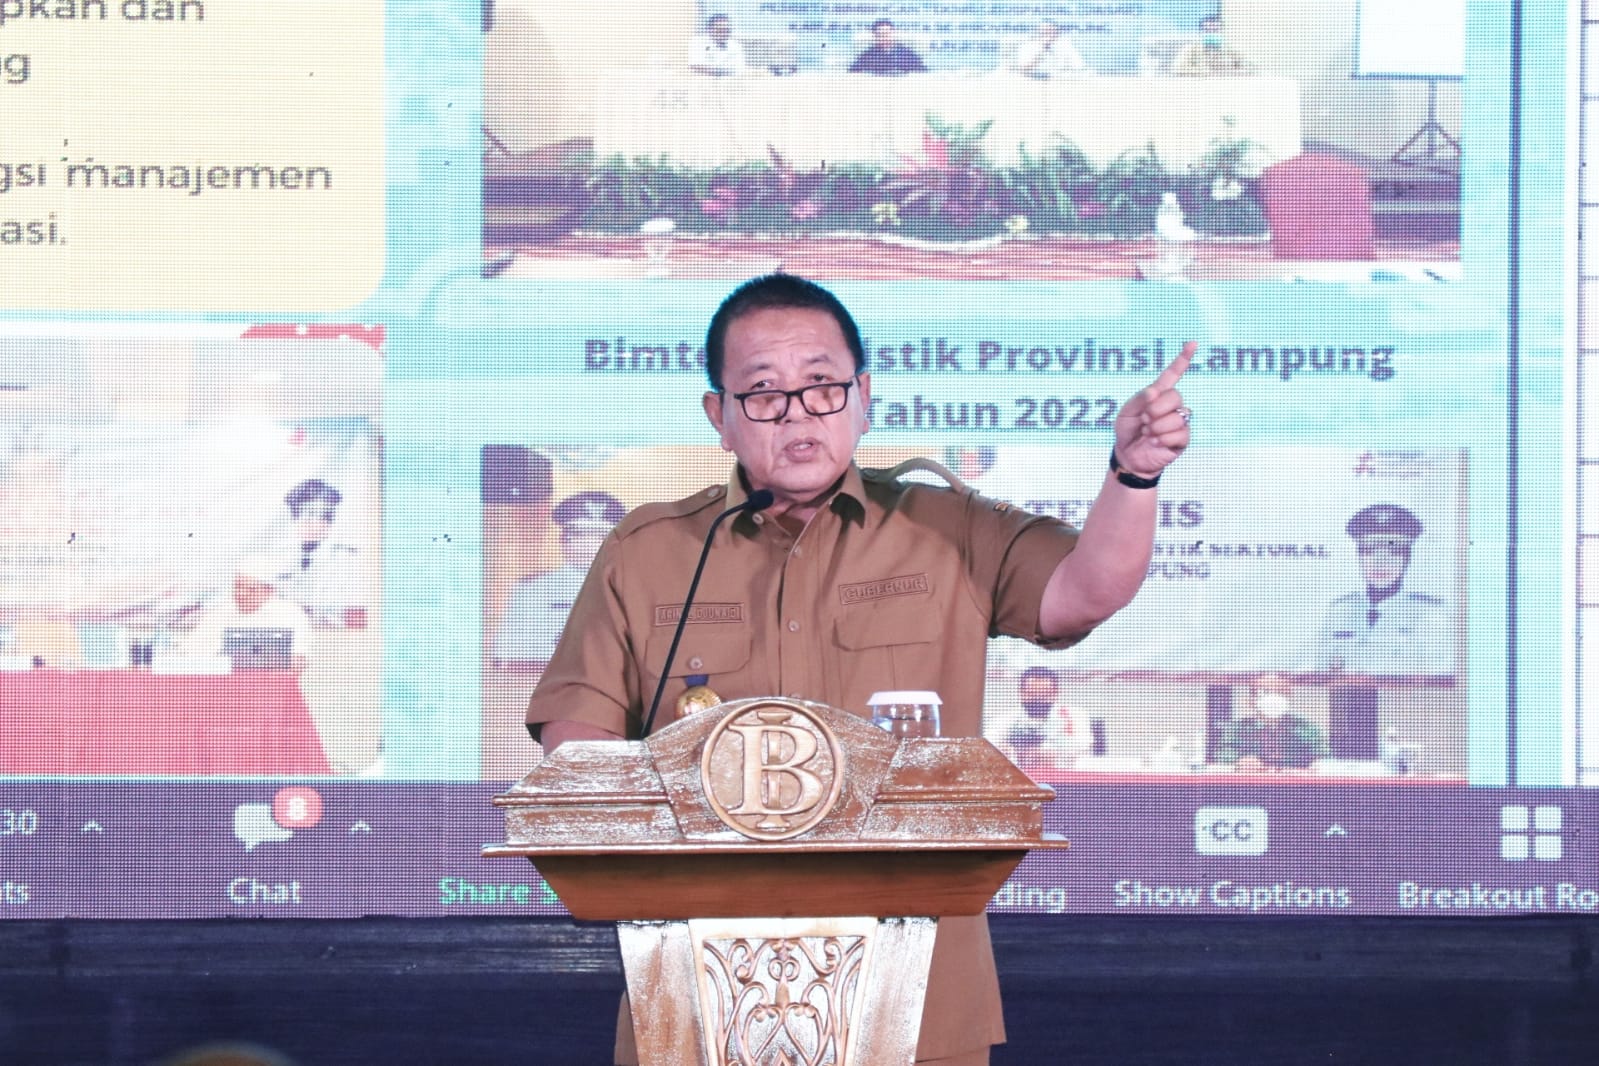 Lokasi Angels Wing Lampung Dekat Dengan Lokasi Pembangunan Masjid Raya, Begini Kata Gubernur